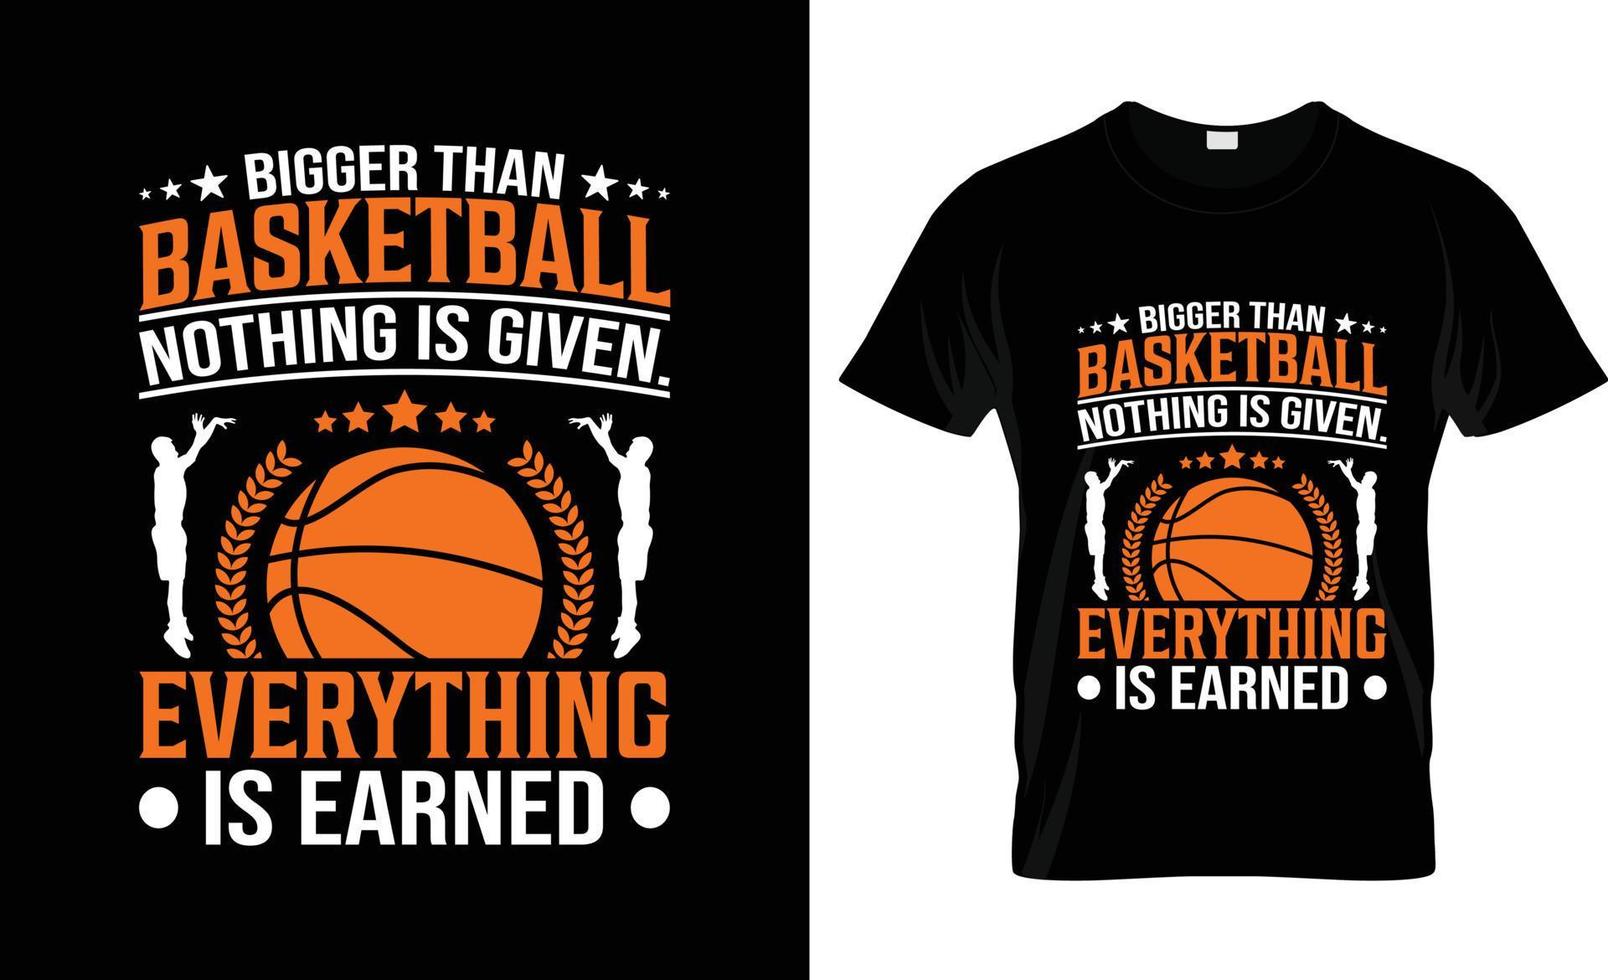 Basketball-T-Shirt-Design, Basketball-T-Shirt-Slogan und Bekleidungsdesign, größer als Basketball, nichts wird Basketball-Typografie, Basketball-Vektor, Basketball-Illustration gegeben vektor